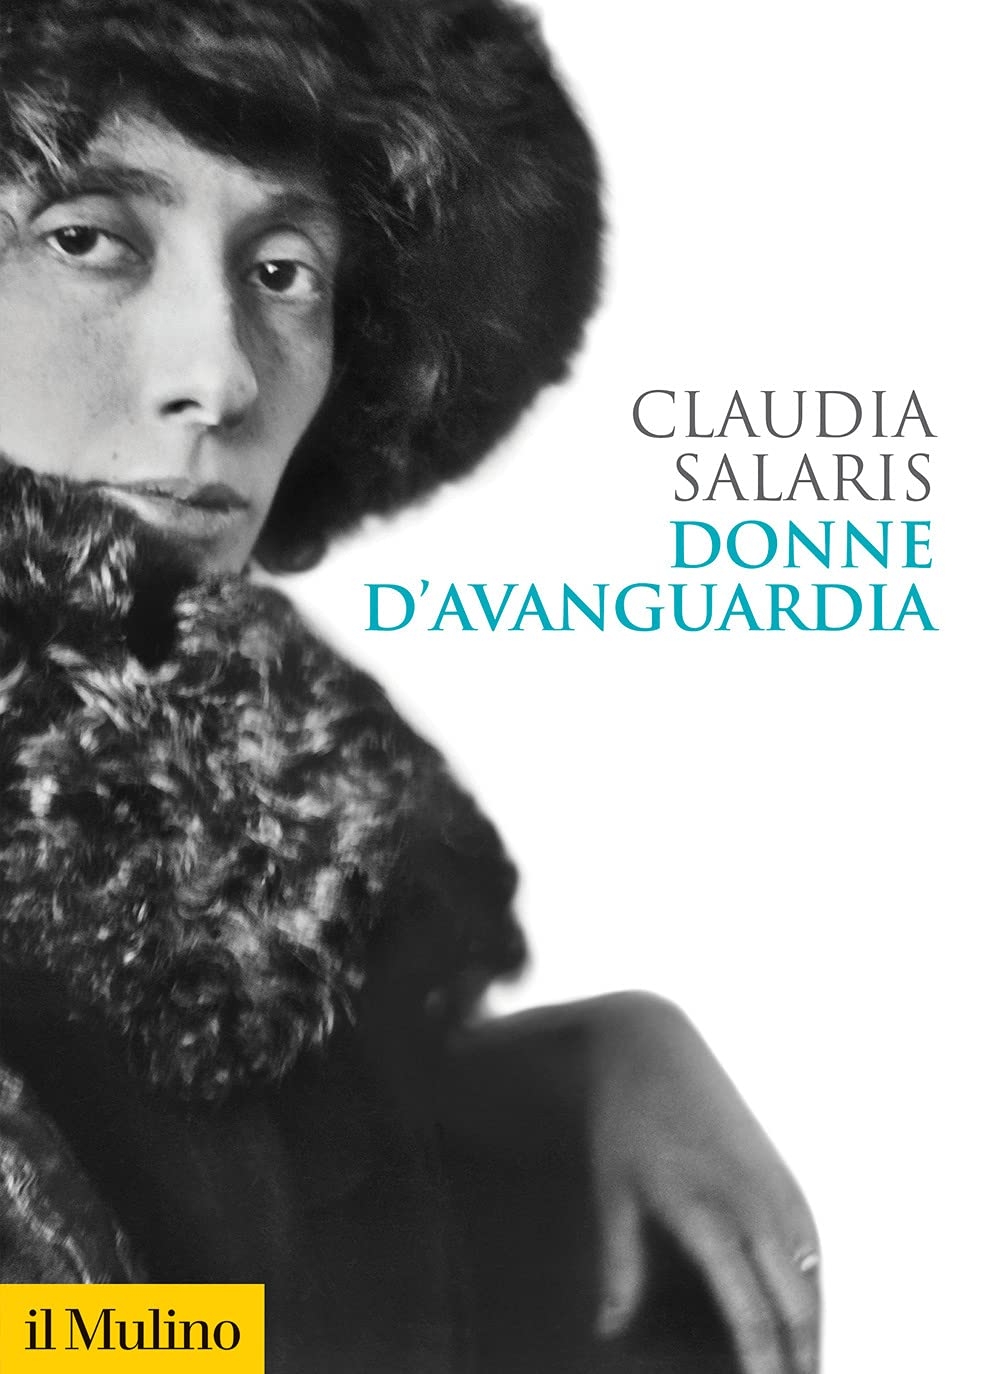 Claudia Salaris – Donne d'avanguardia (il Mulino, Bologna 2021)